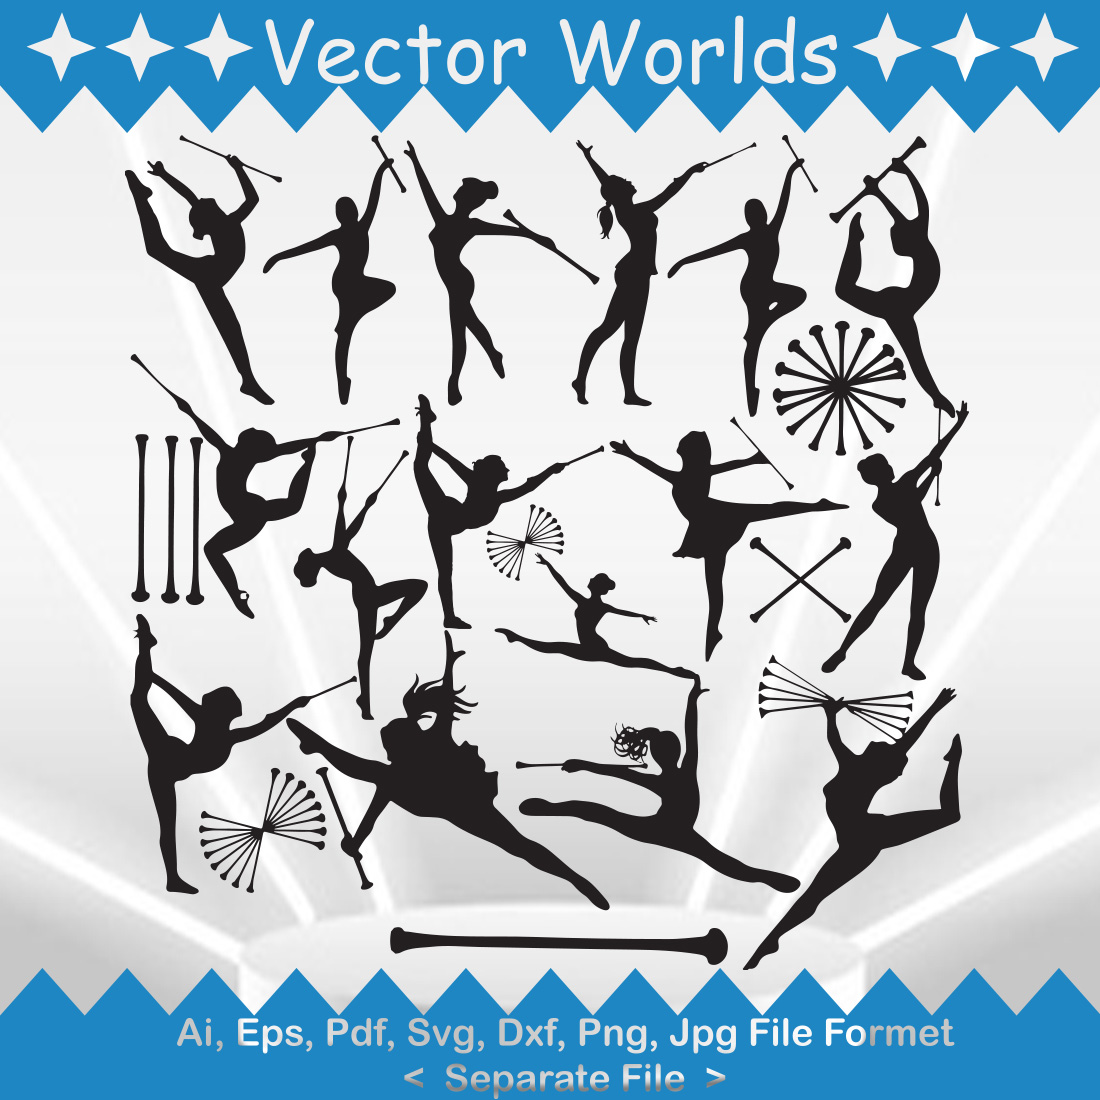 Baton Twirling SVG Vector Design cover image.